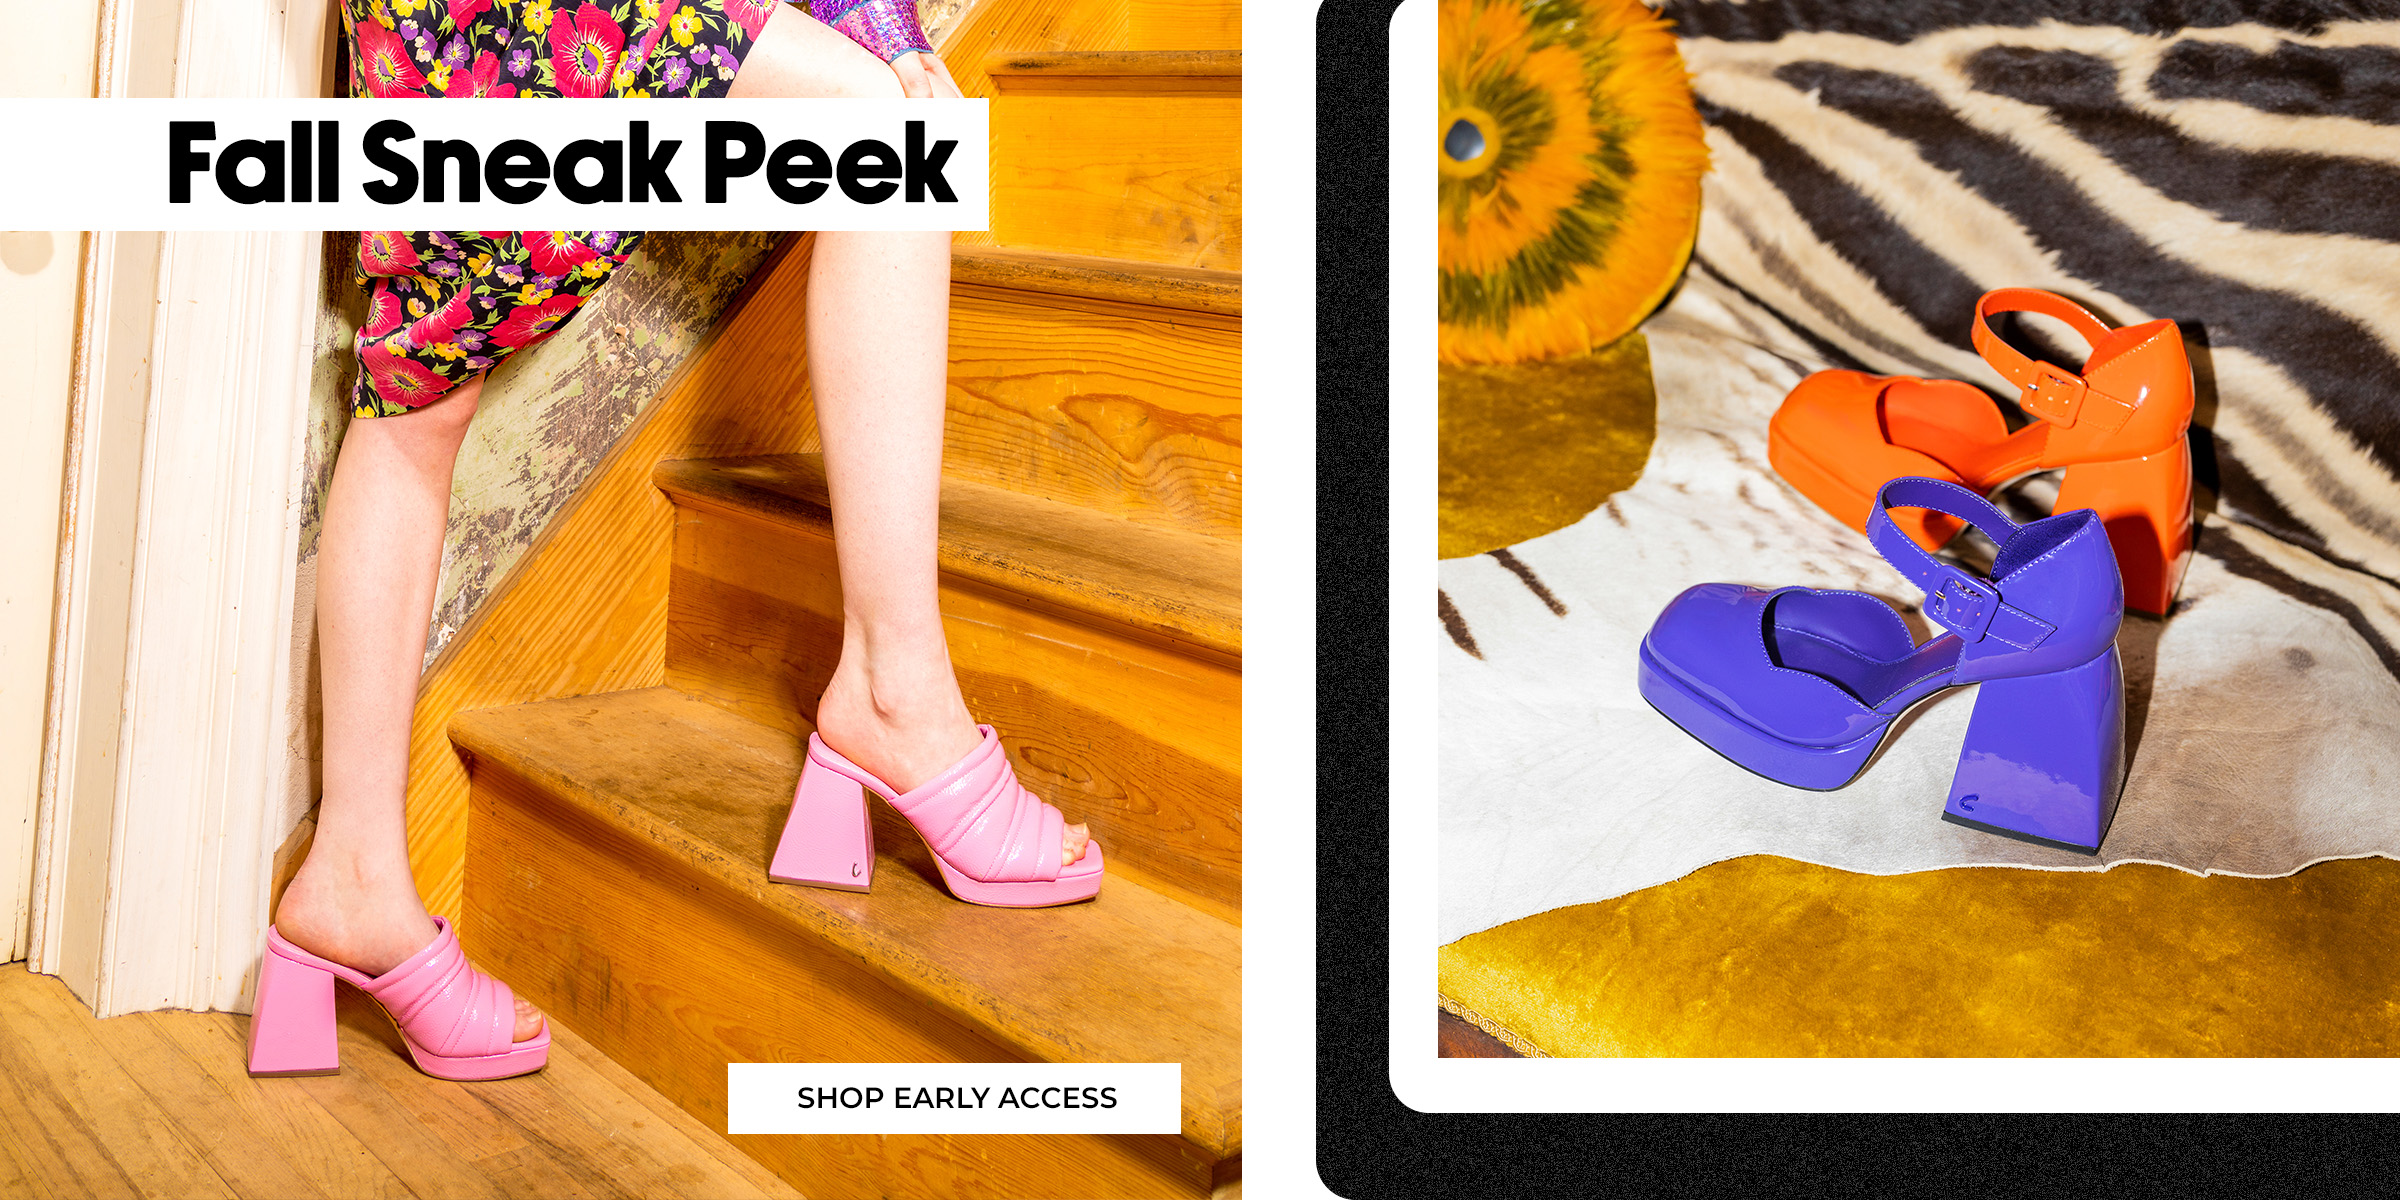 Shop early access to fall sneak peek shoes